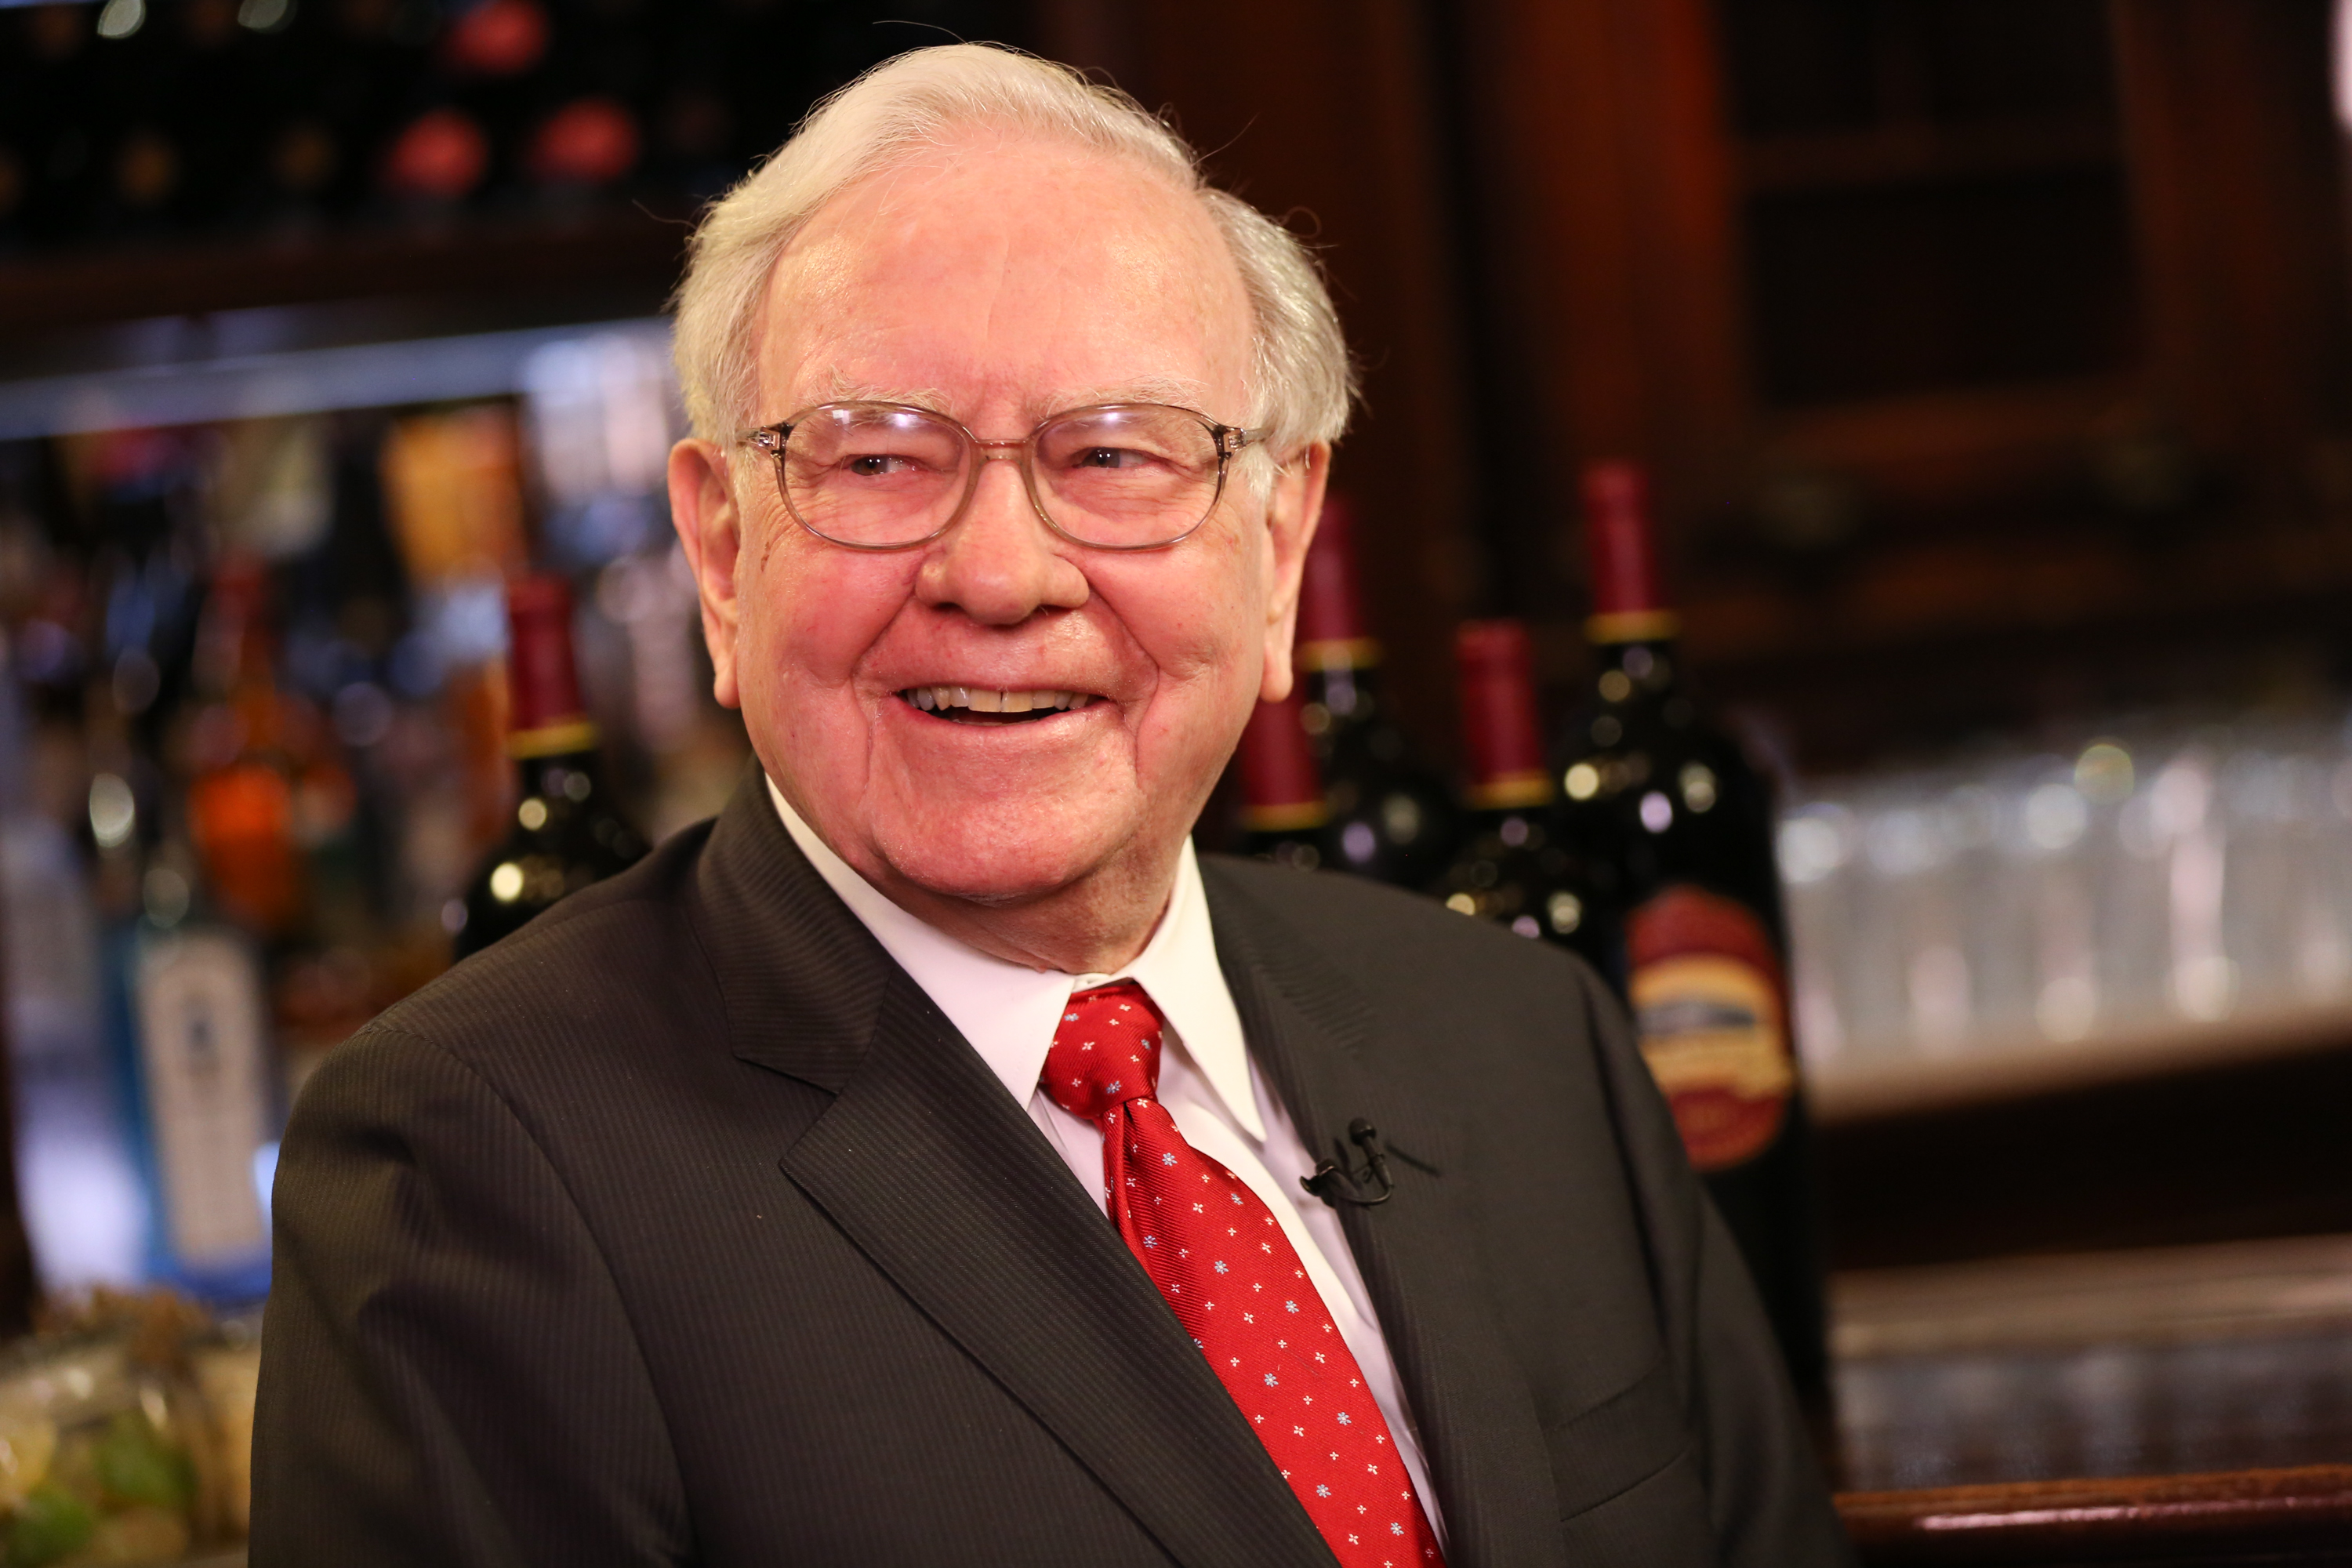 Warren Buffett Lunch Auction Already at $2.6 Million with Plenty of Time Left